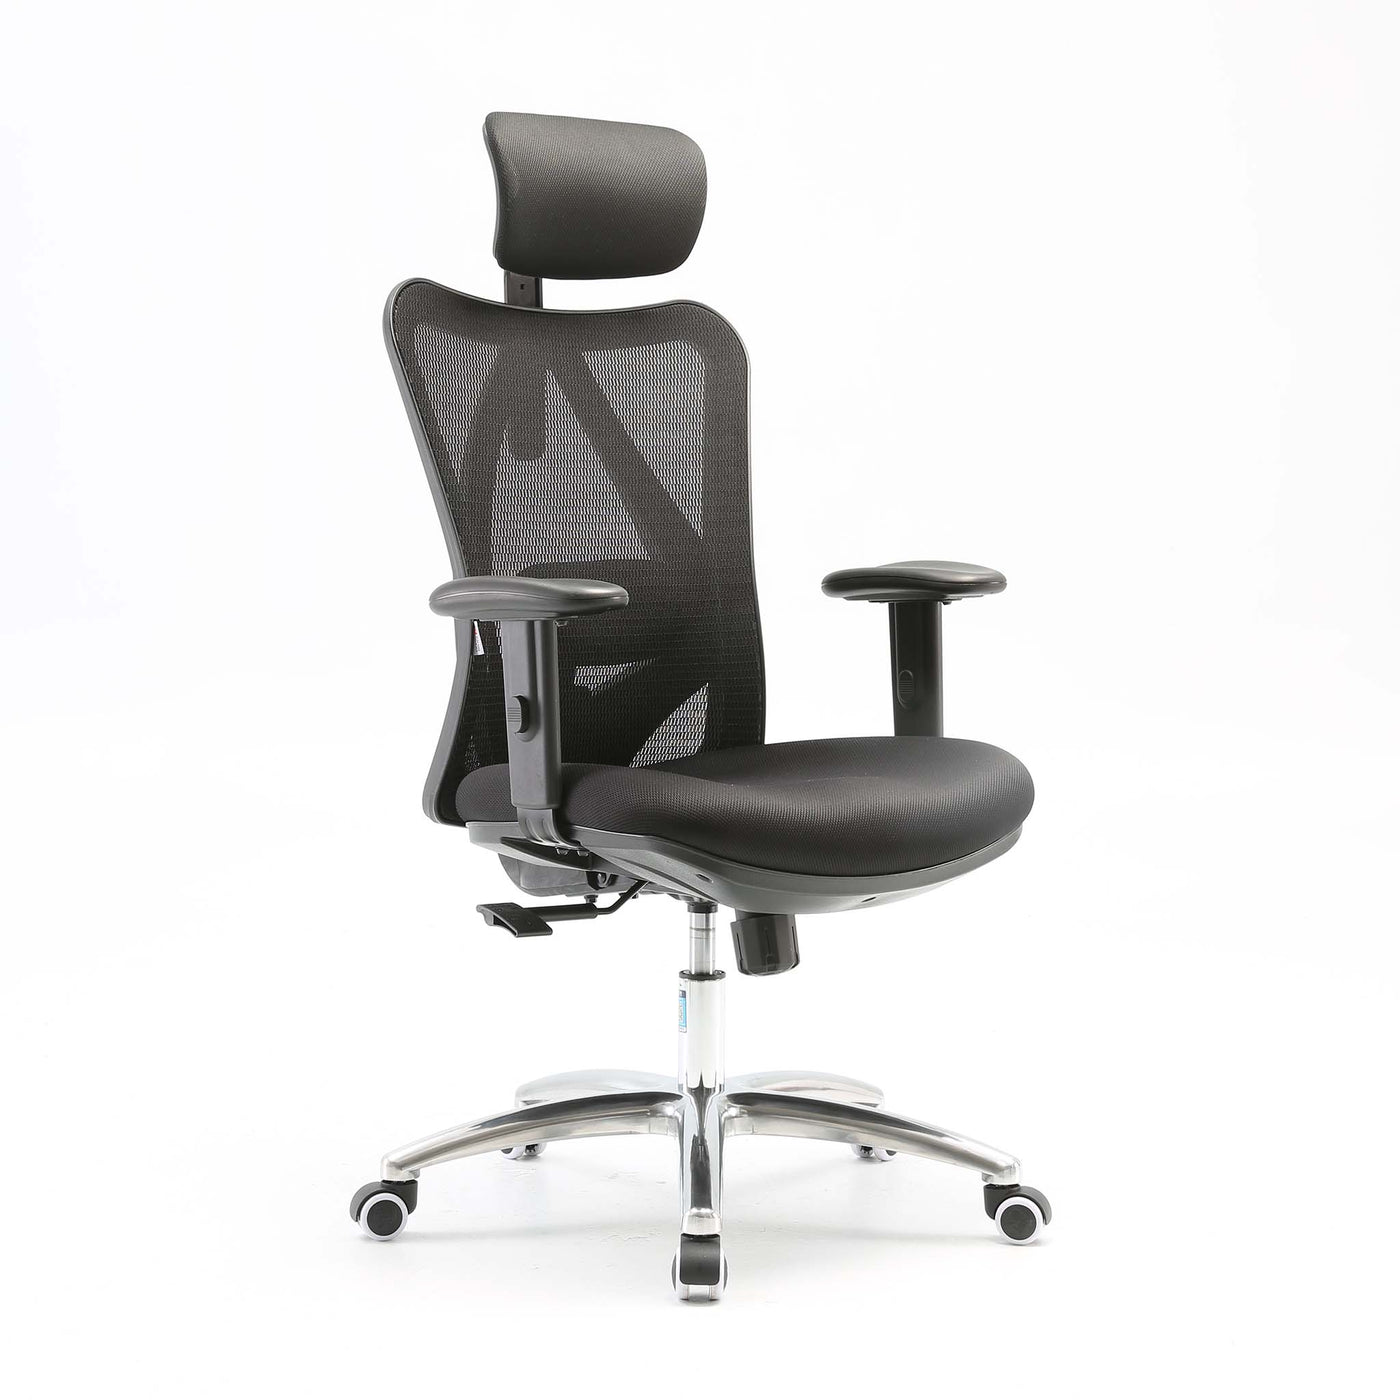 SIHOO mesh office chair